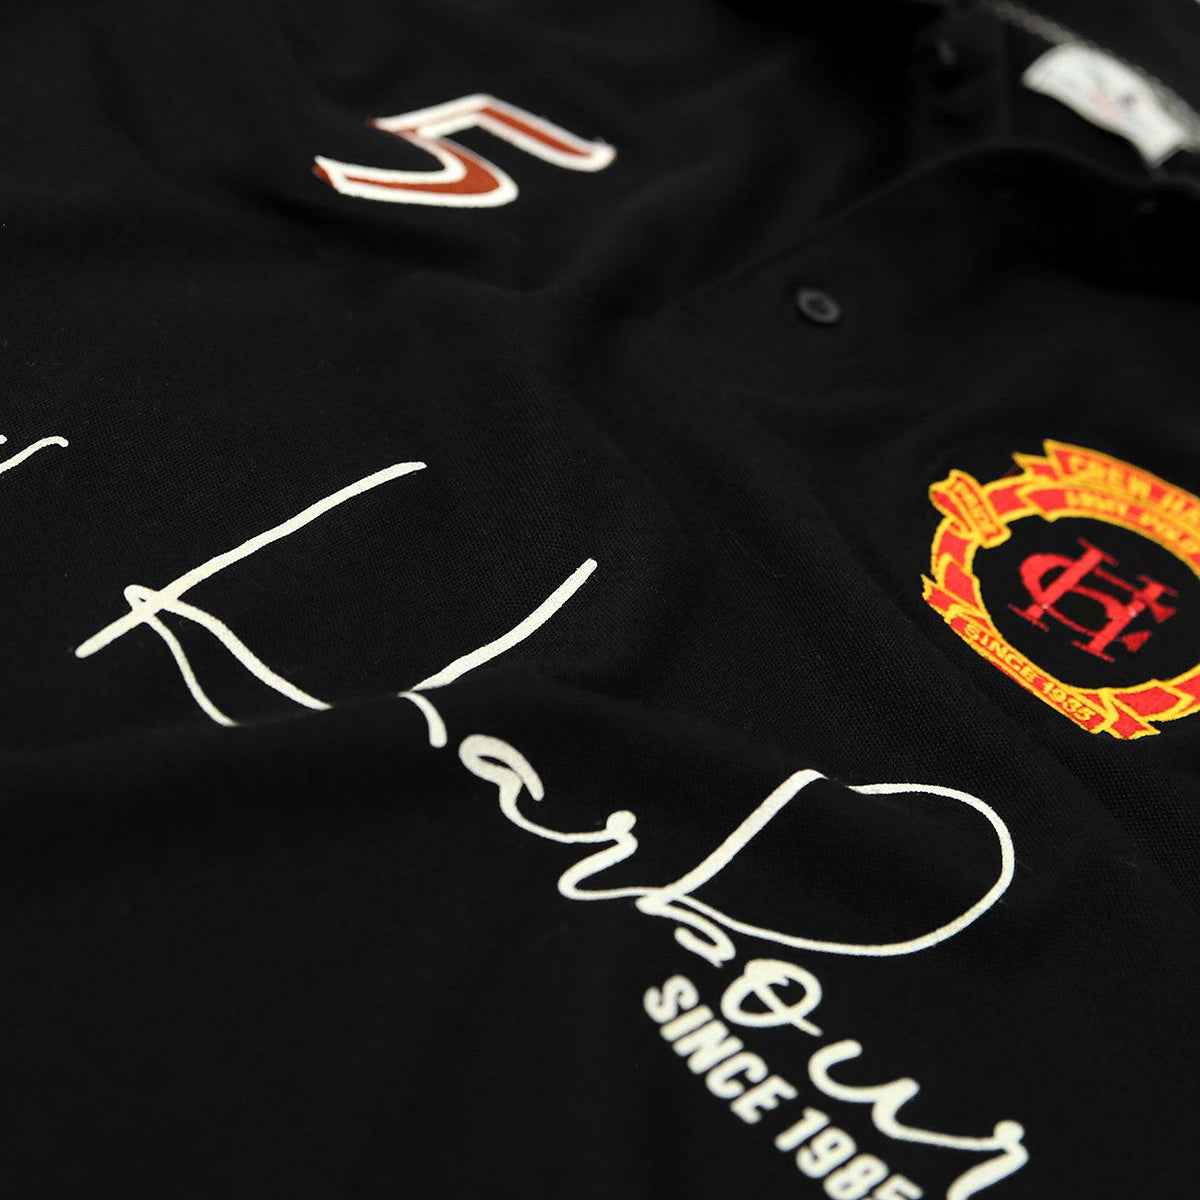 Mens Premium Quality Black Slim Fit Embellished Embroidered Pique Polo Shirt (CR-11248) - Brands River